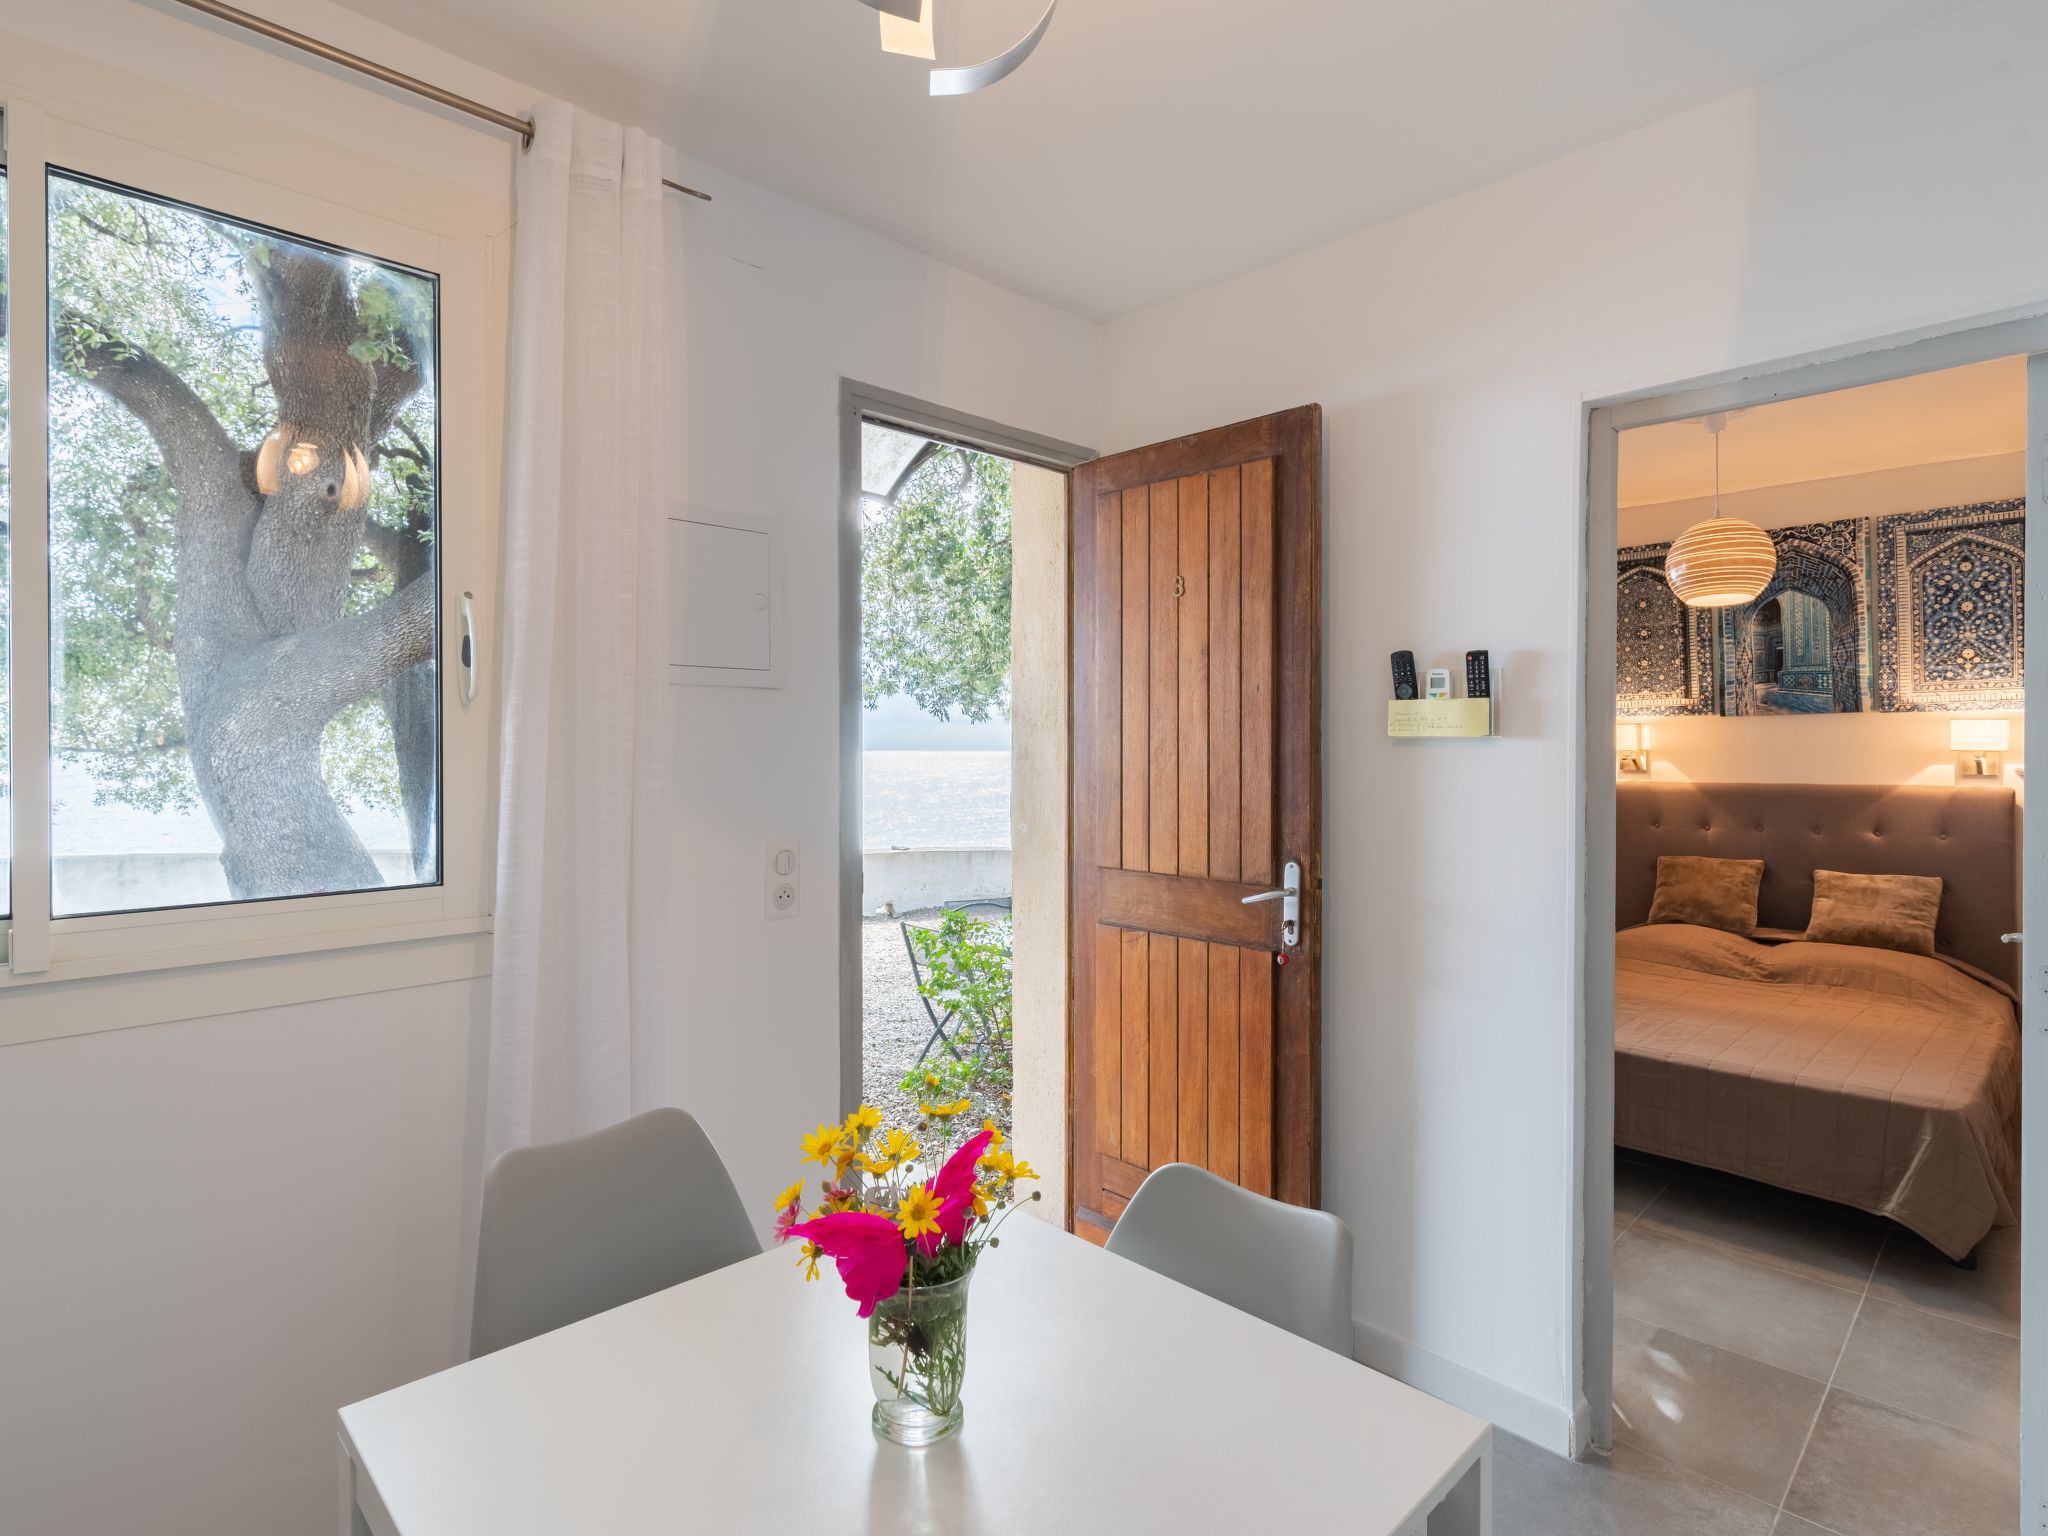 Photo 4 - 2 bedroom House in Sari-Solenzara with garden and sea view